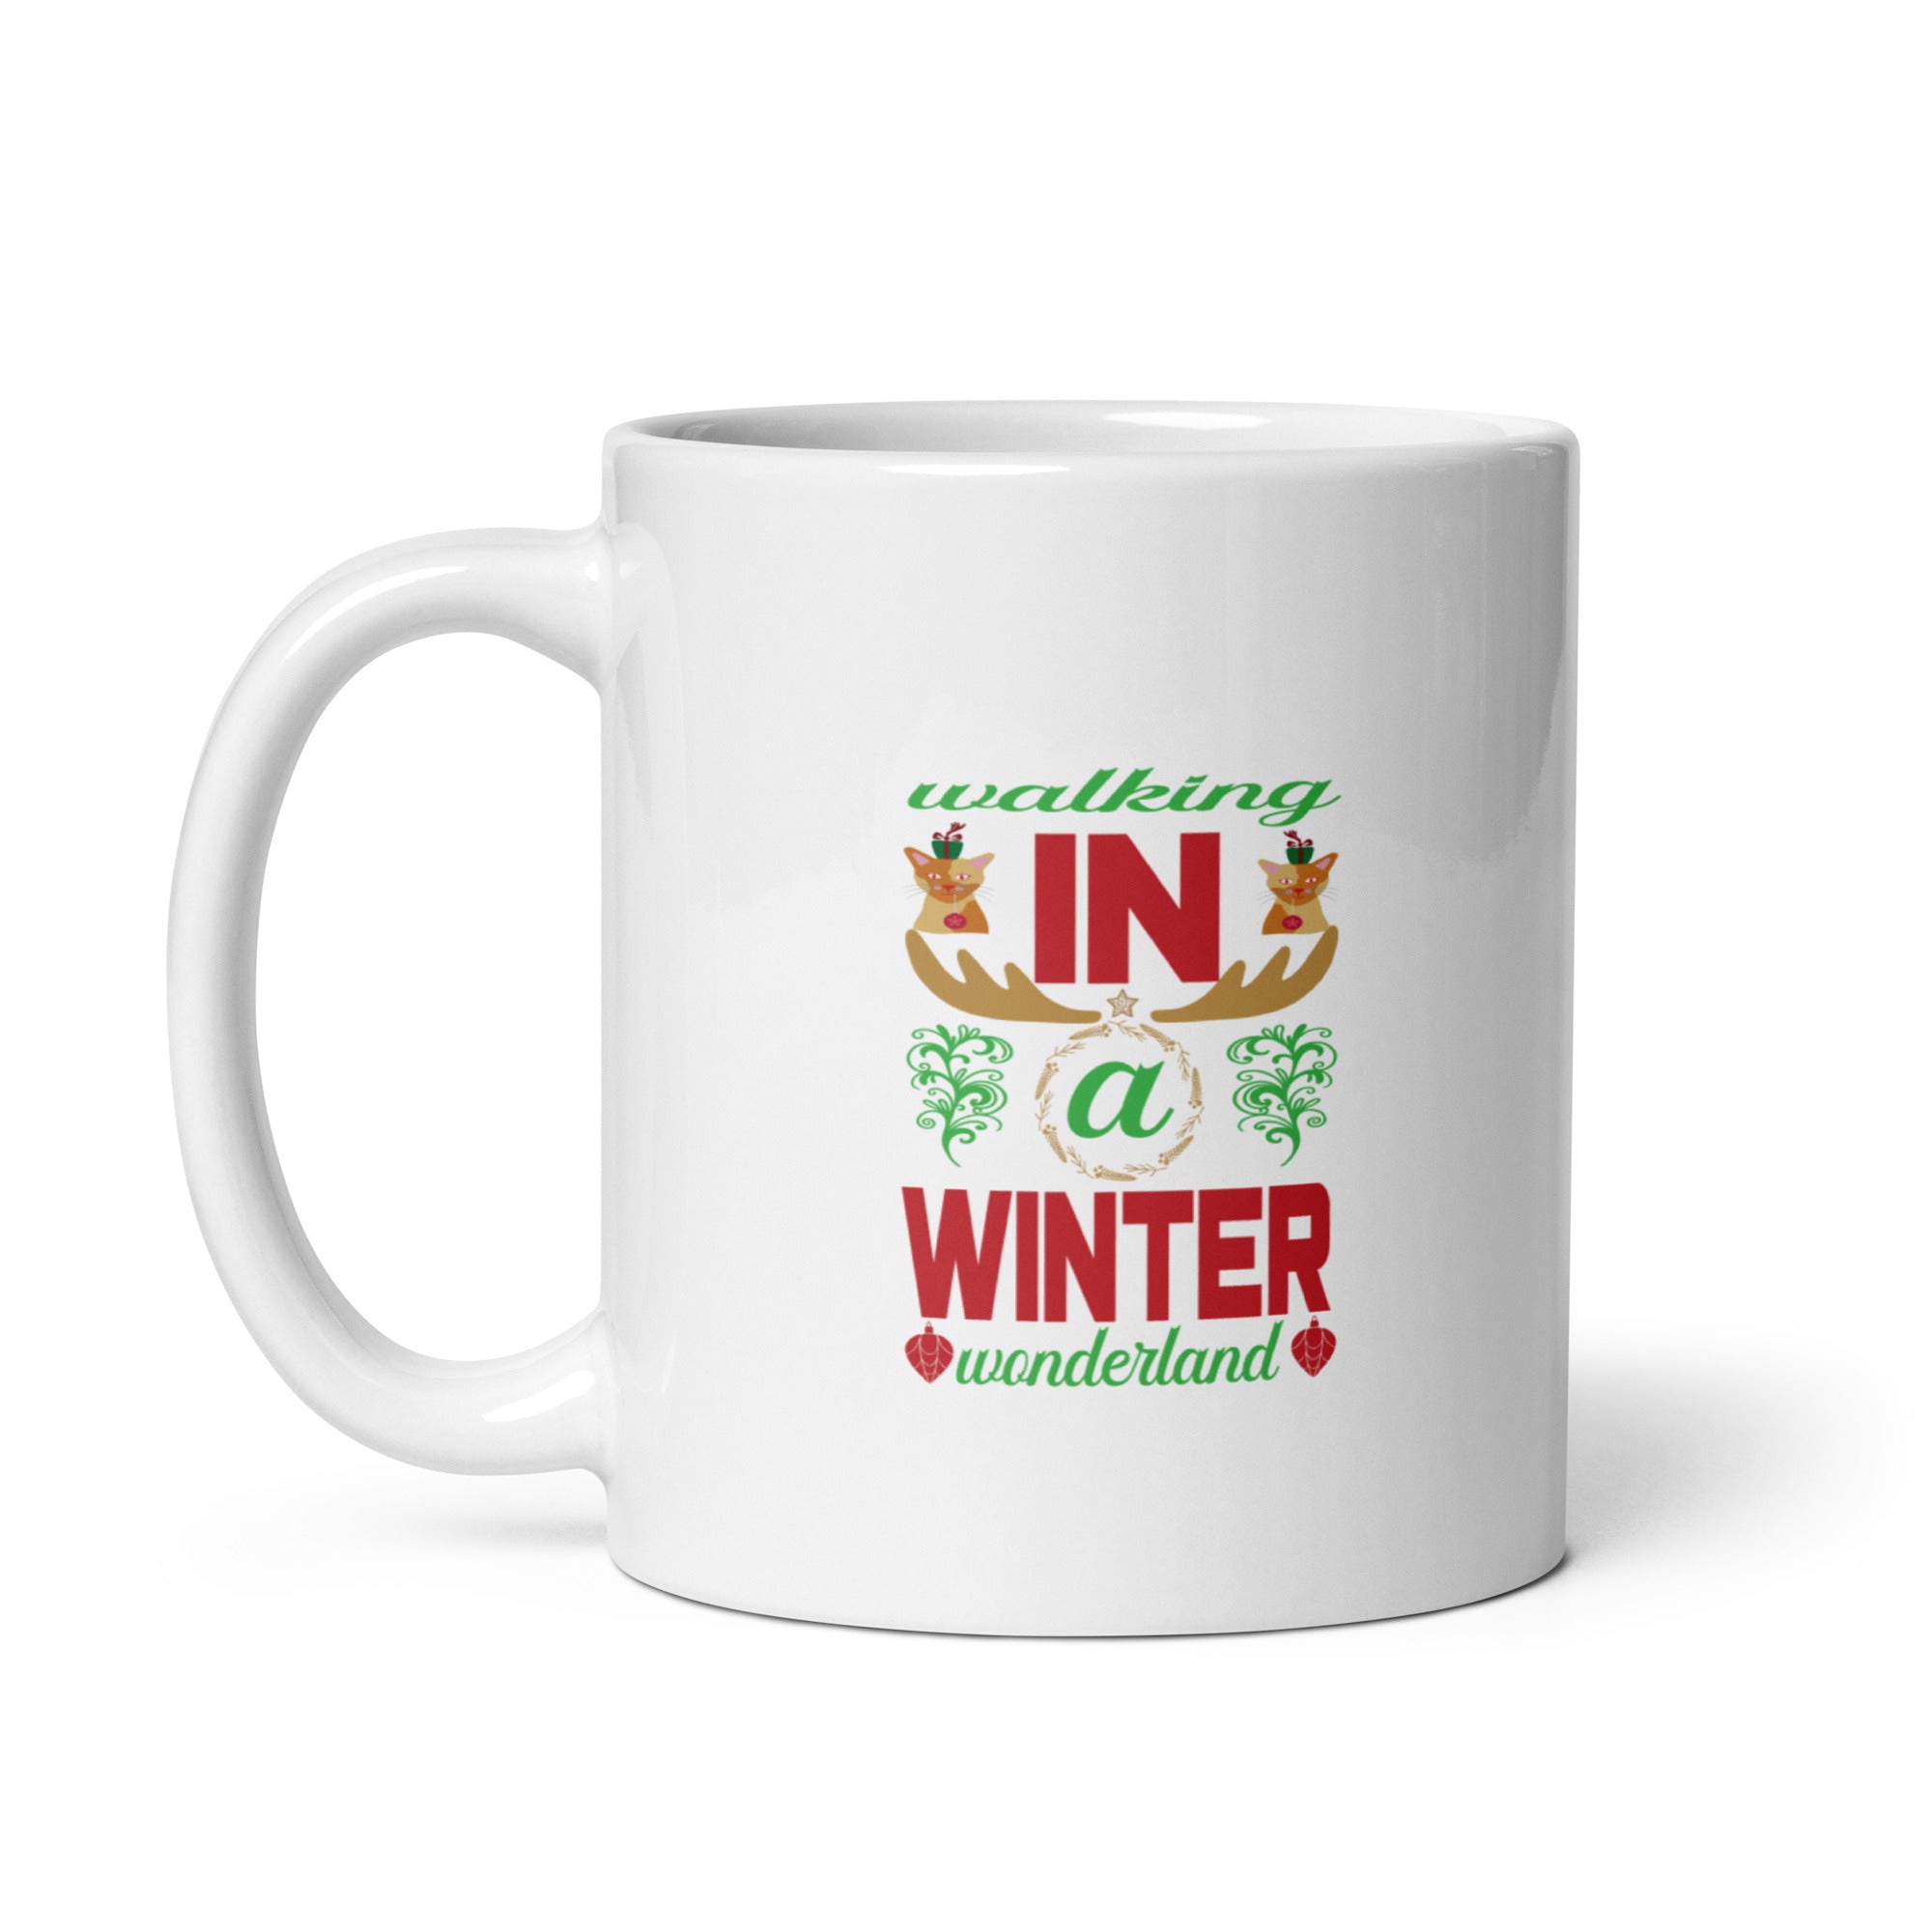 Walking In A Winter Wonderland - White glossy mug